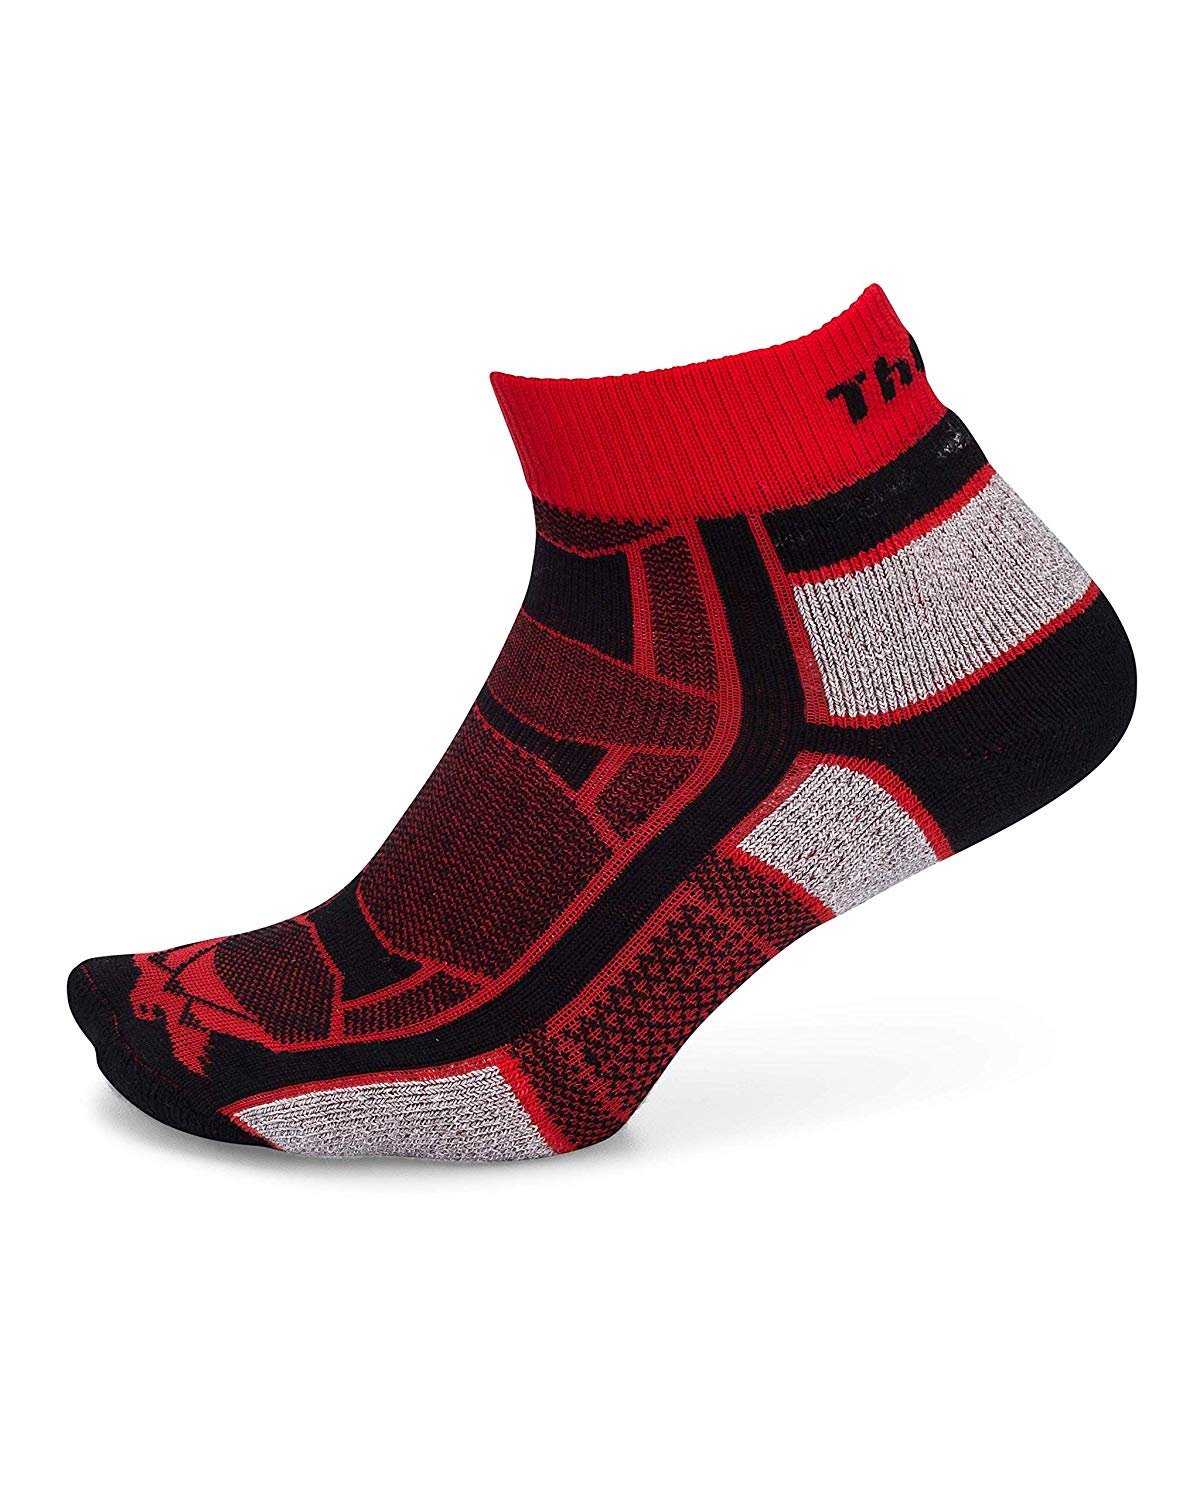 Thorlos Unisex Adult OAQU Outdoor Athlete Thin Padded Ankle Sock 6 ...